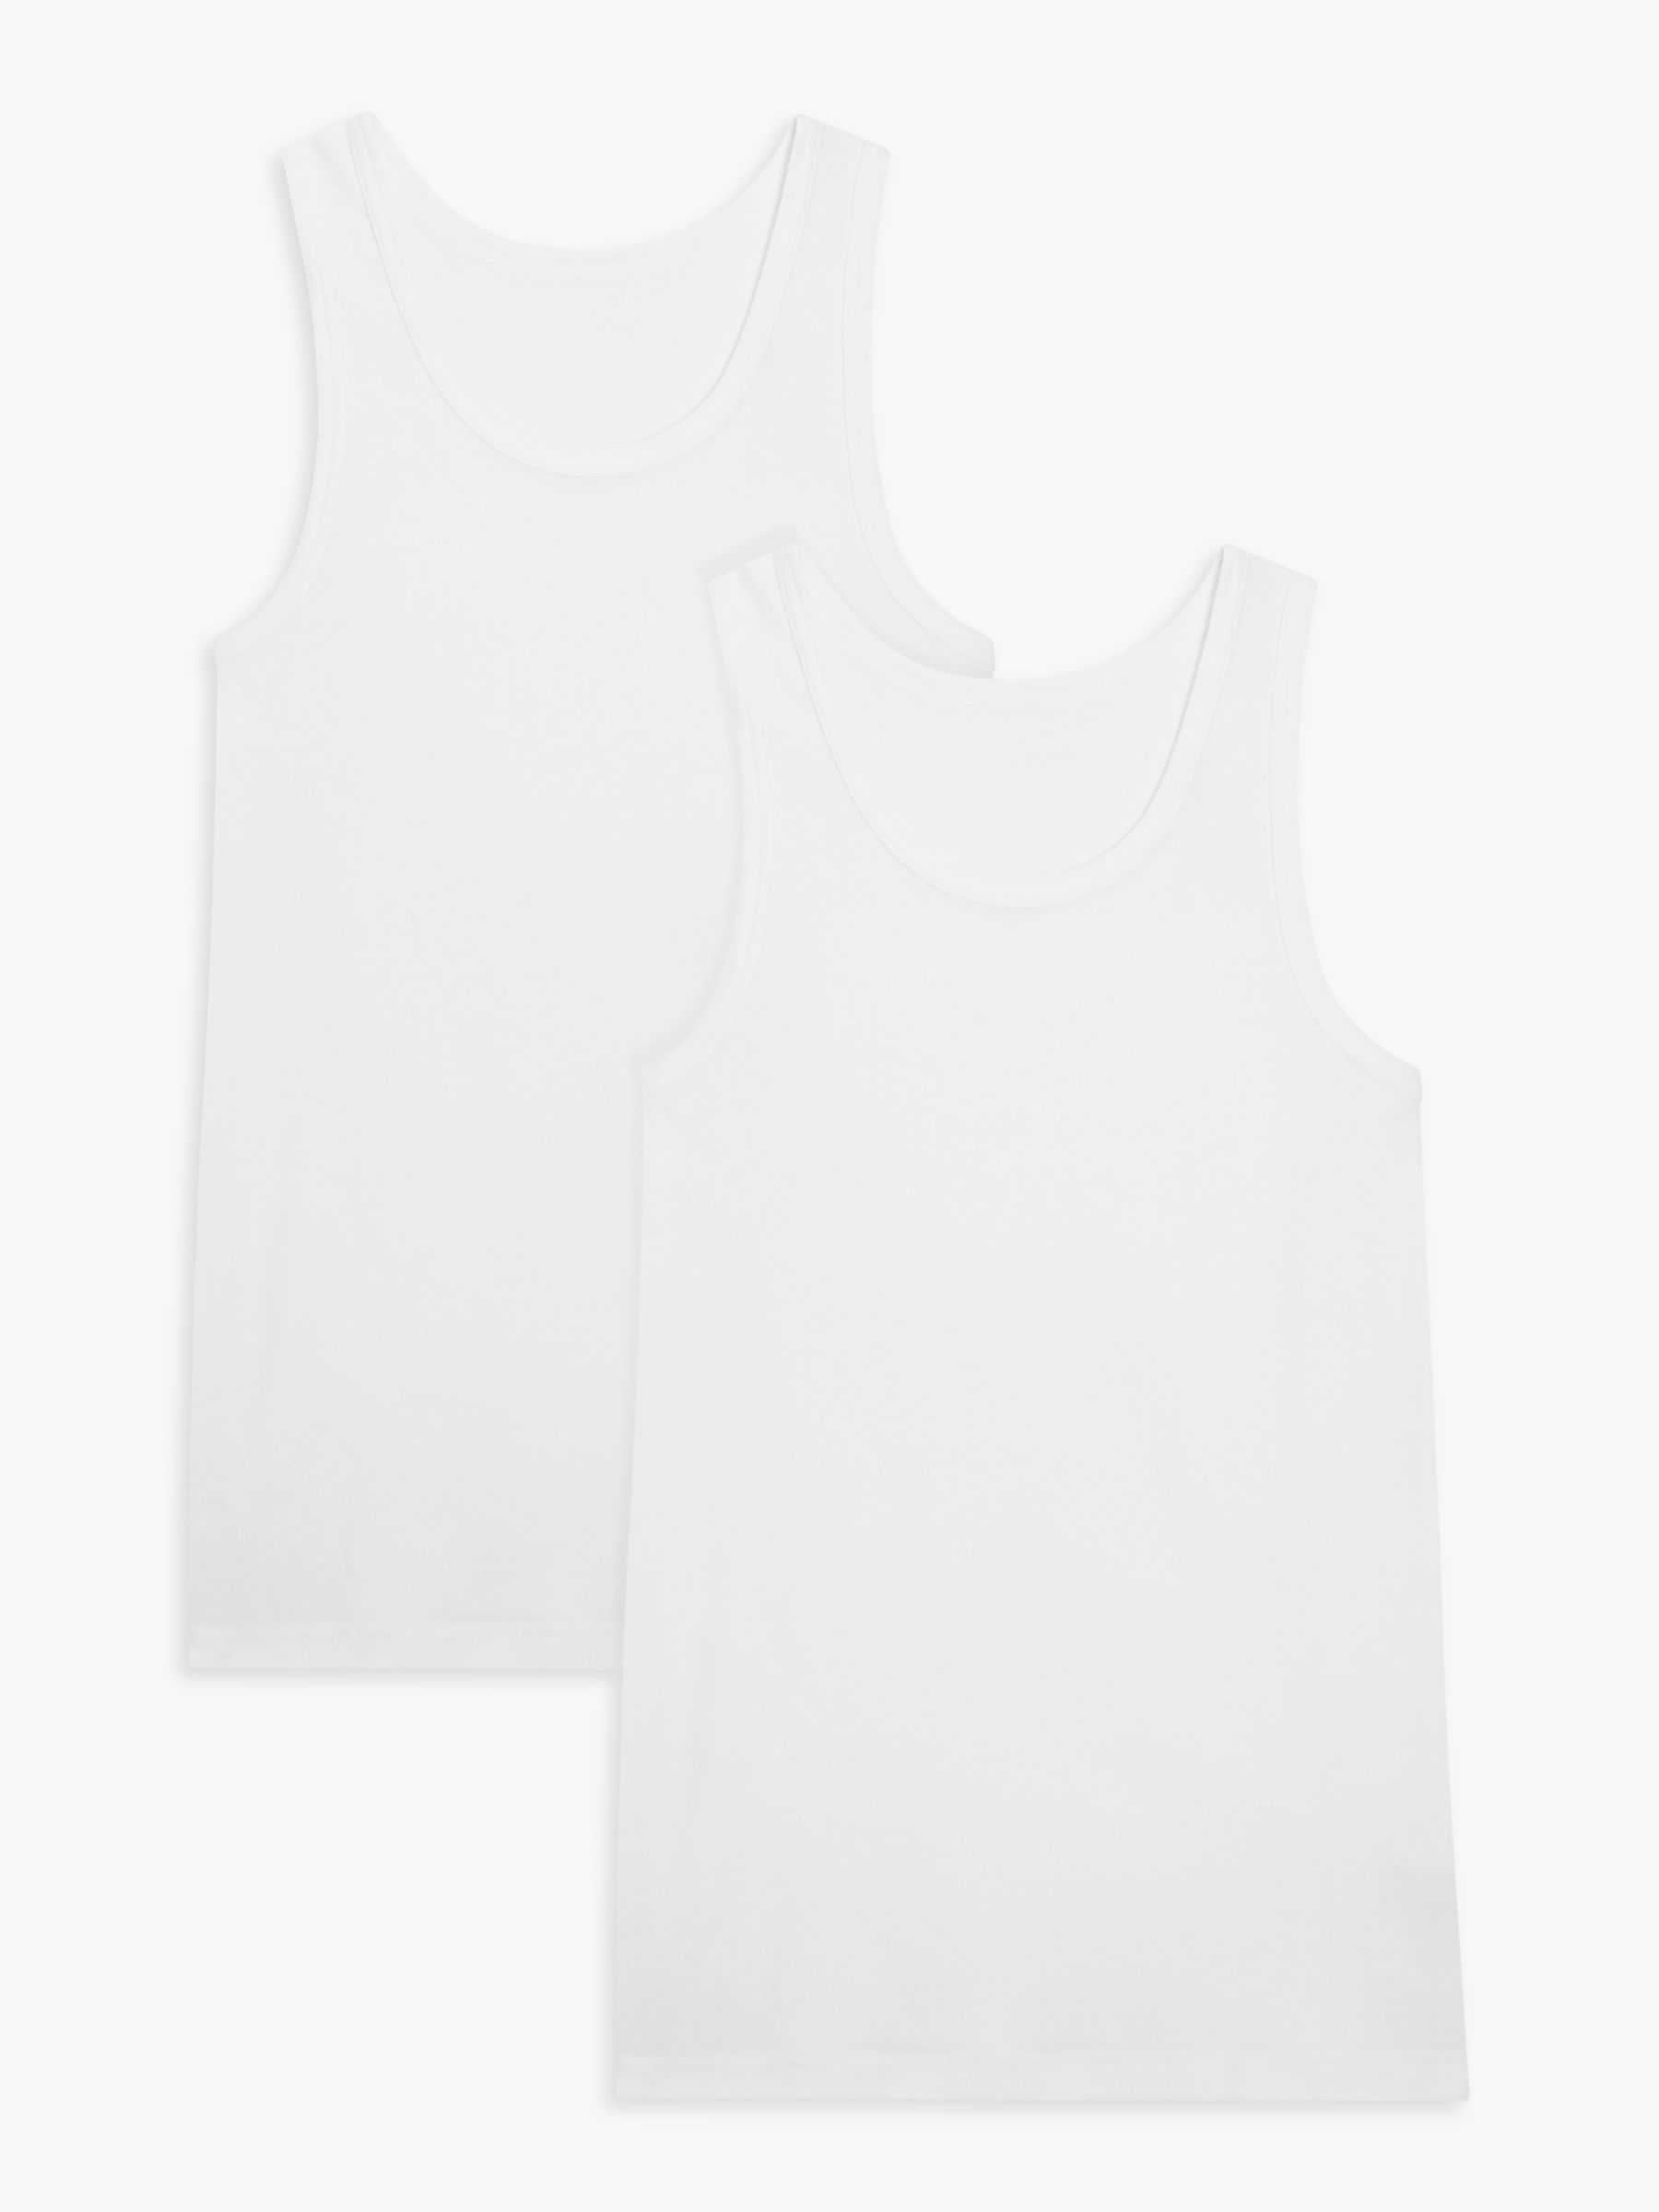 John Lewis Organic Cotton Vest, Pack of 2, White, M